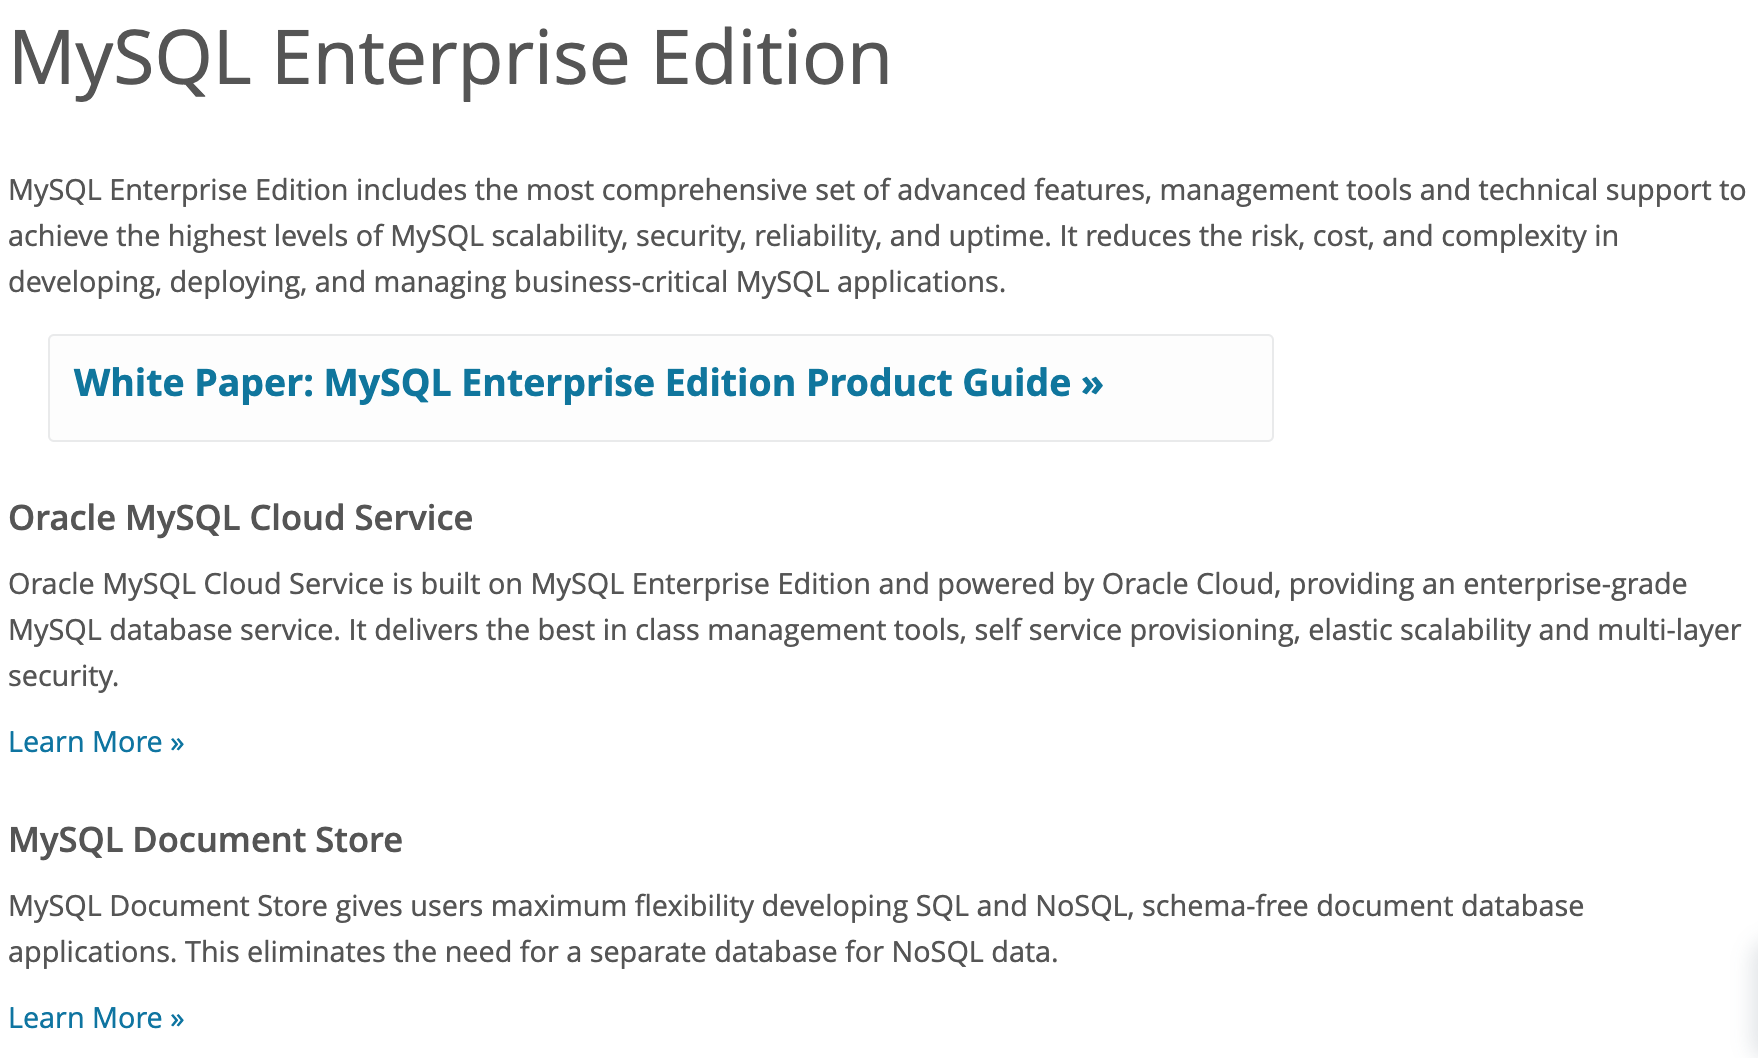 MySQL Enterprise Edition includes the most comprehensive set of advanced features.